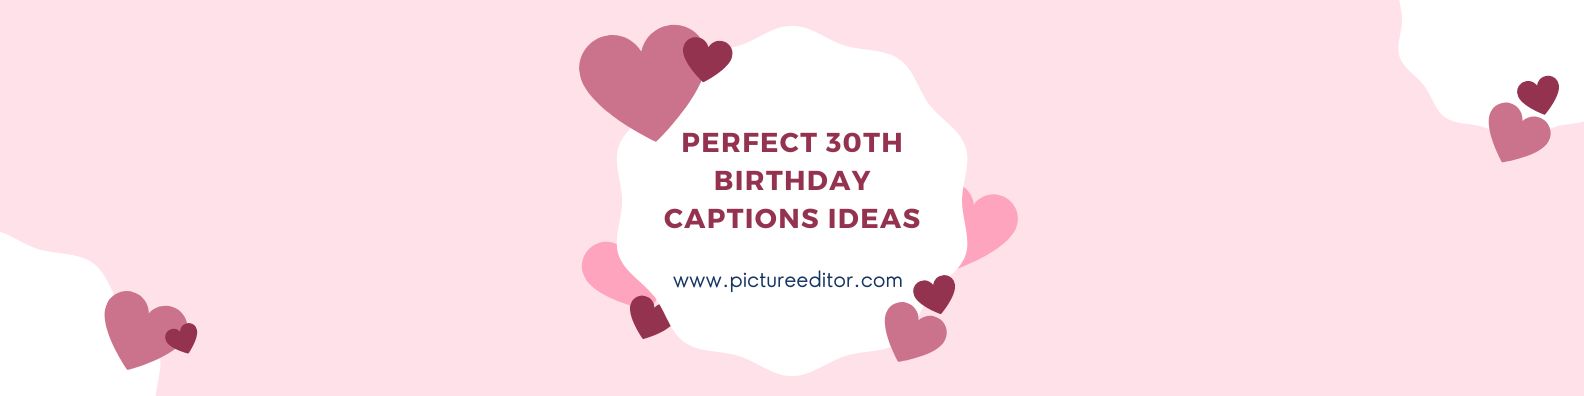 Perfect 30th Birthday Captions Ideas